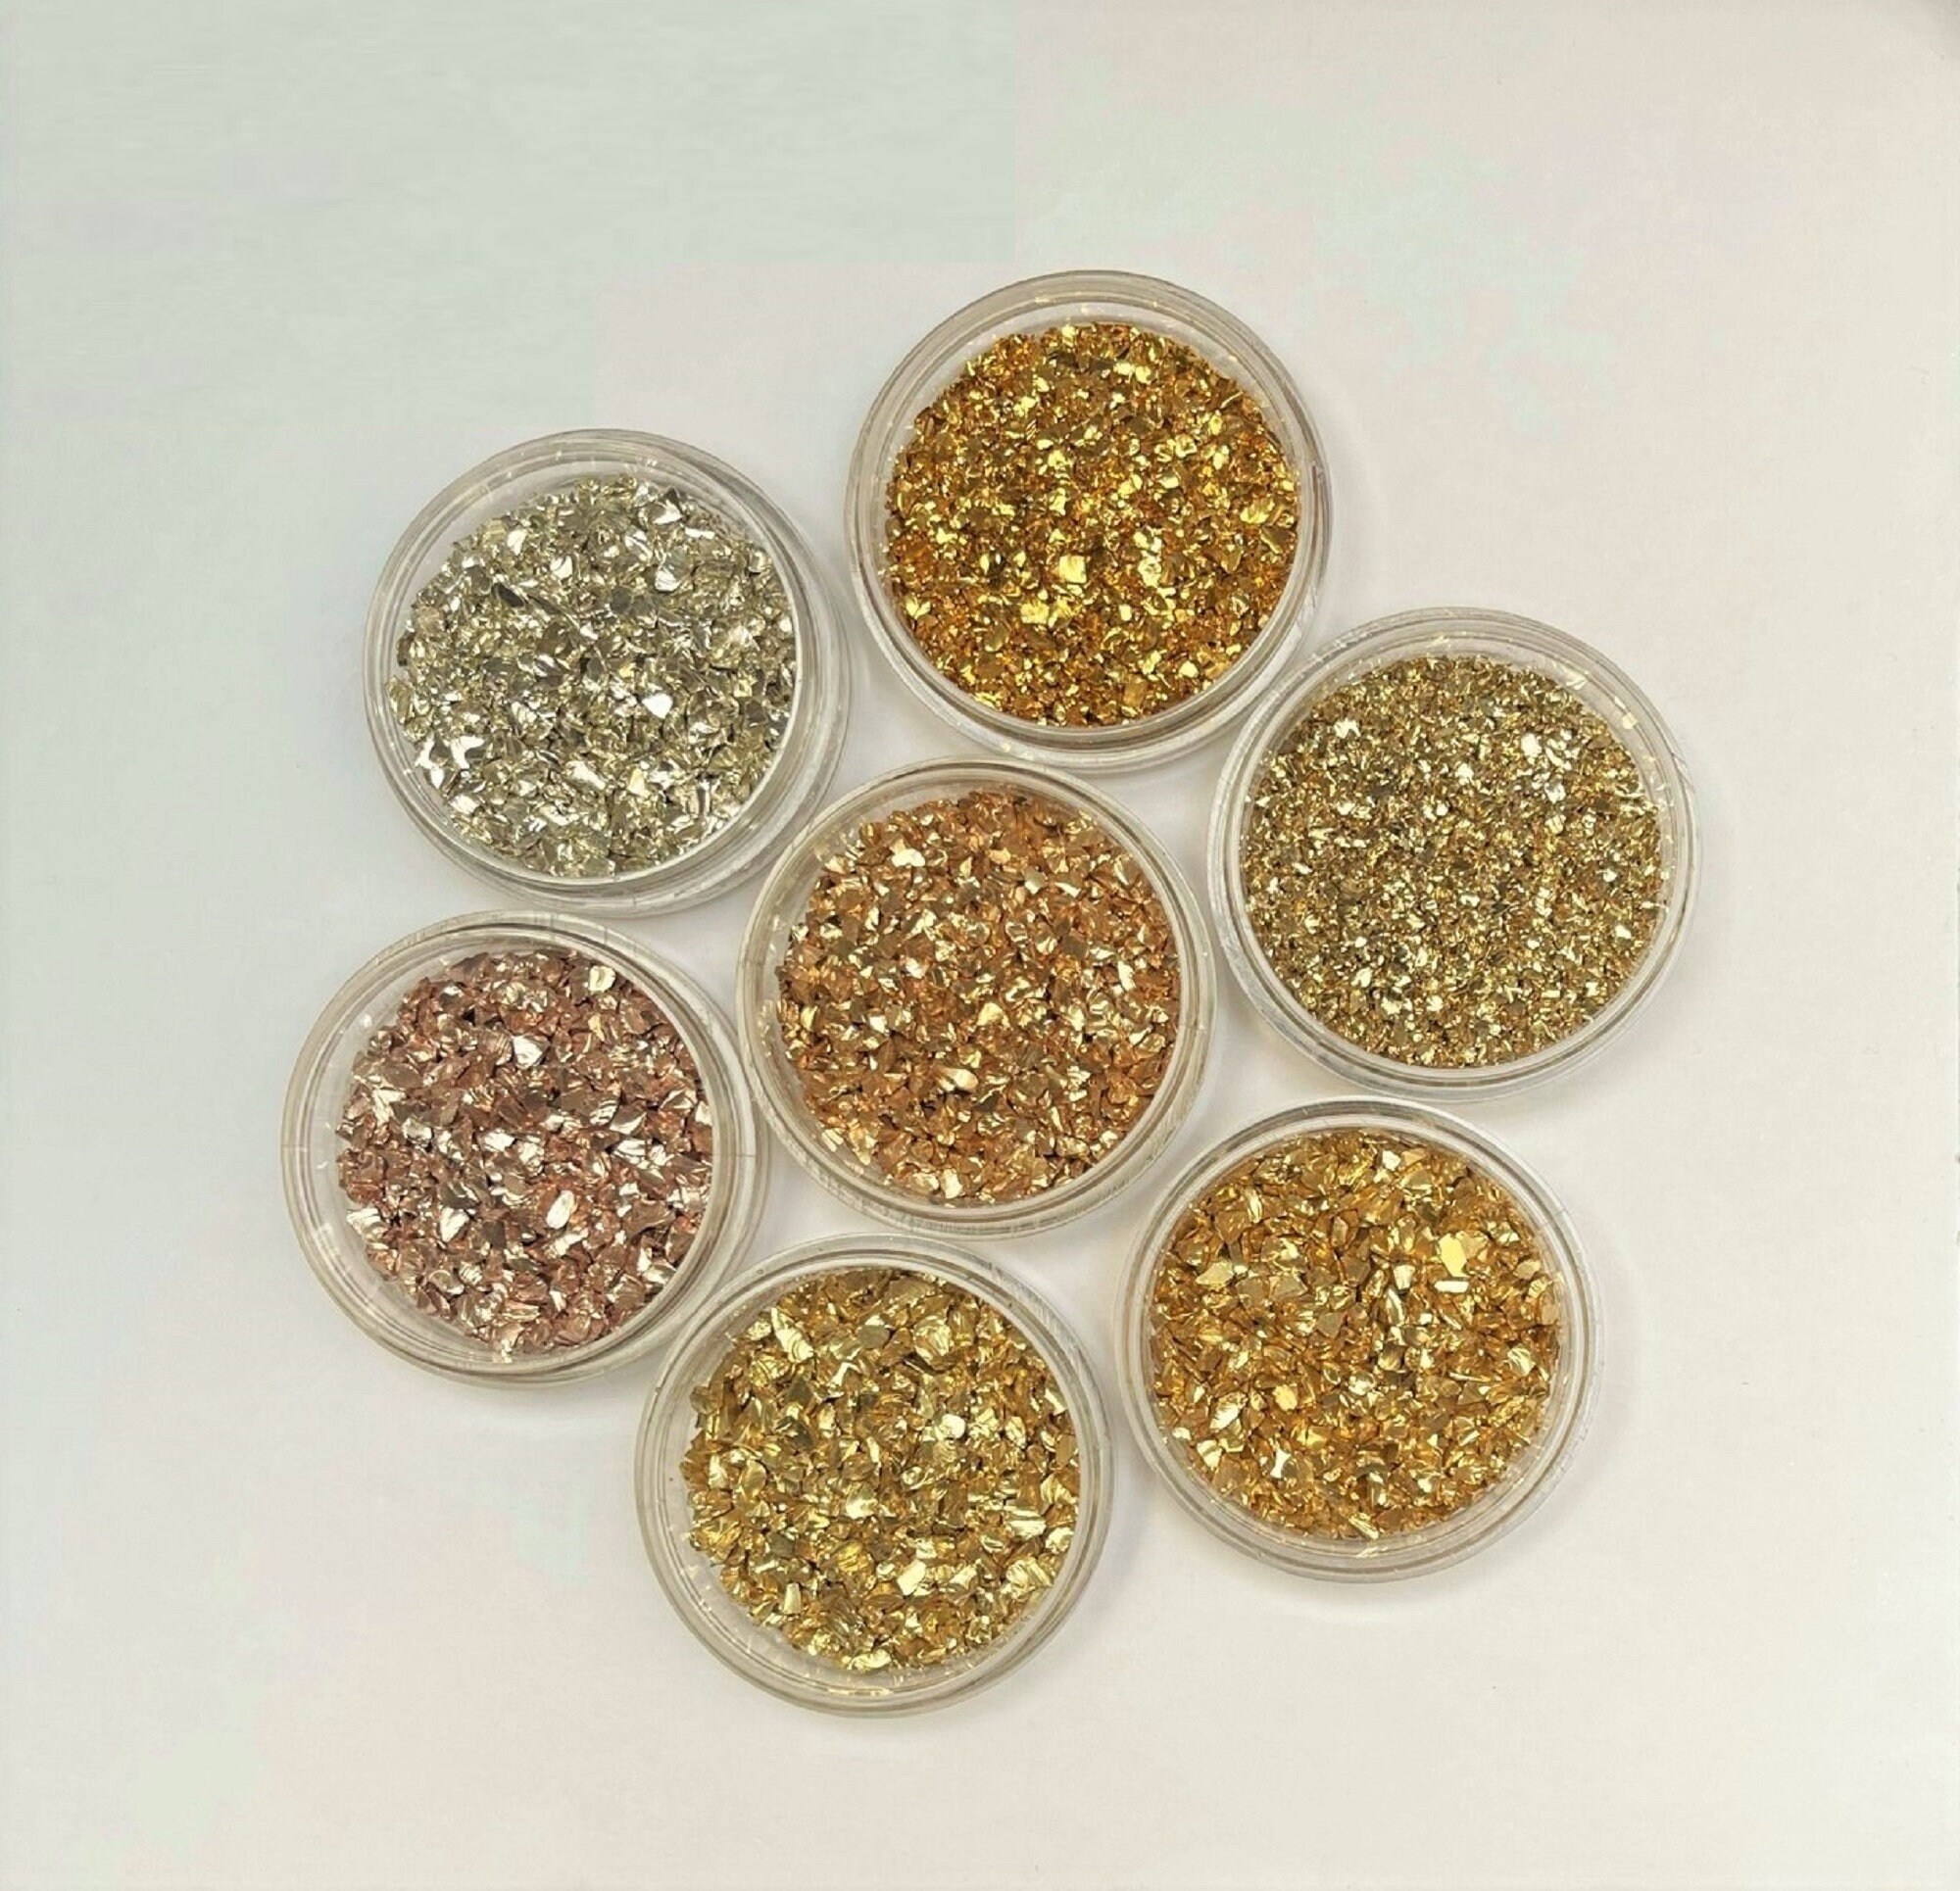 Glass Glitter Gold .2-.3mm 1lb | by SaveOnCrafts.com